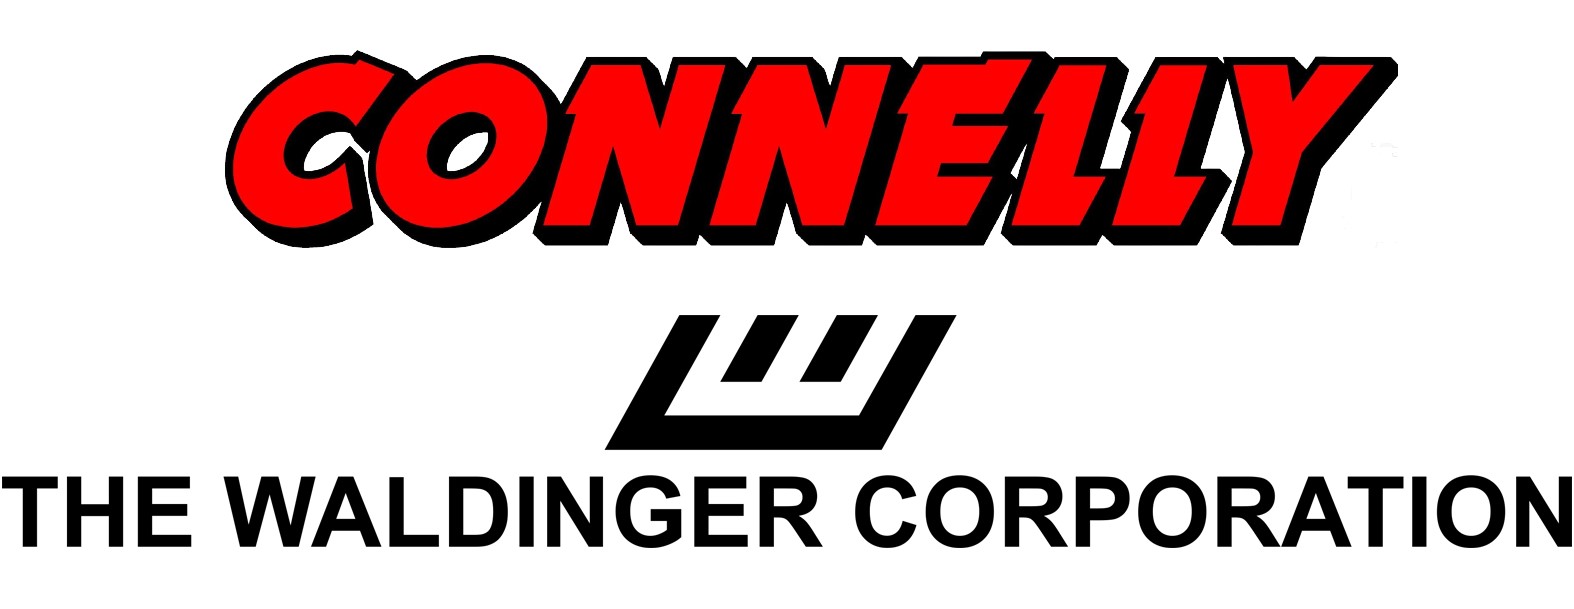 Connelly Waldinger logo